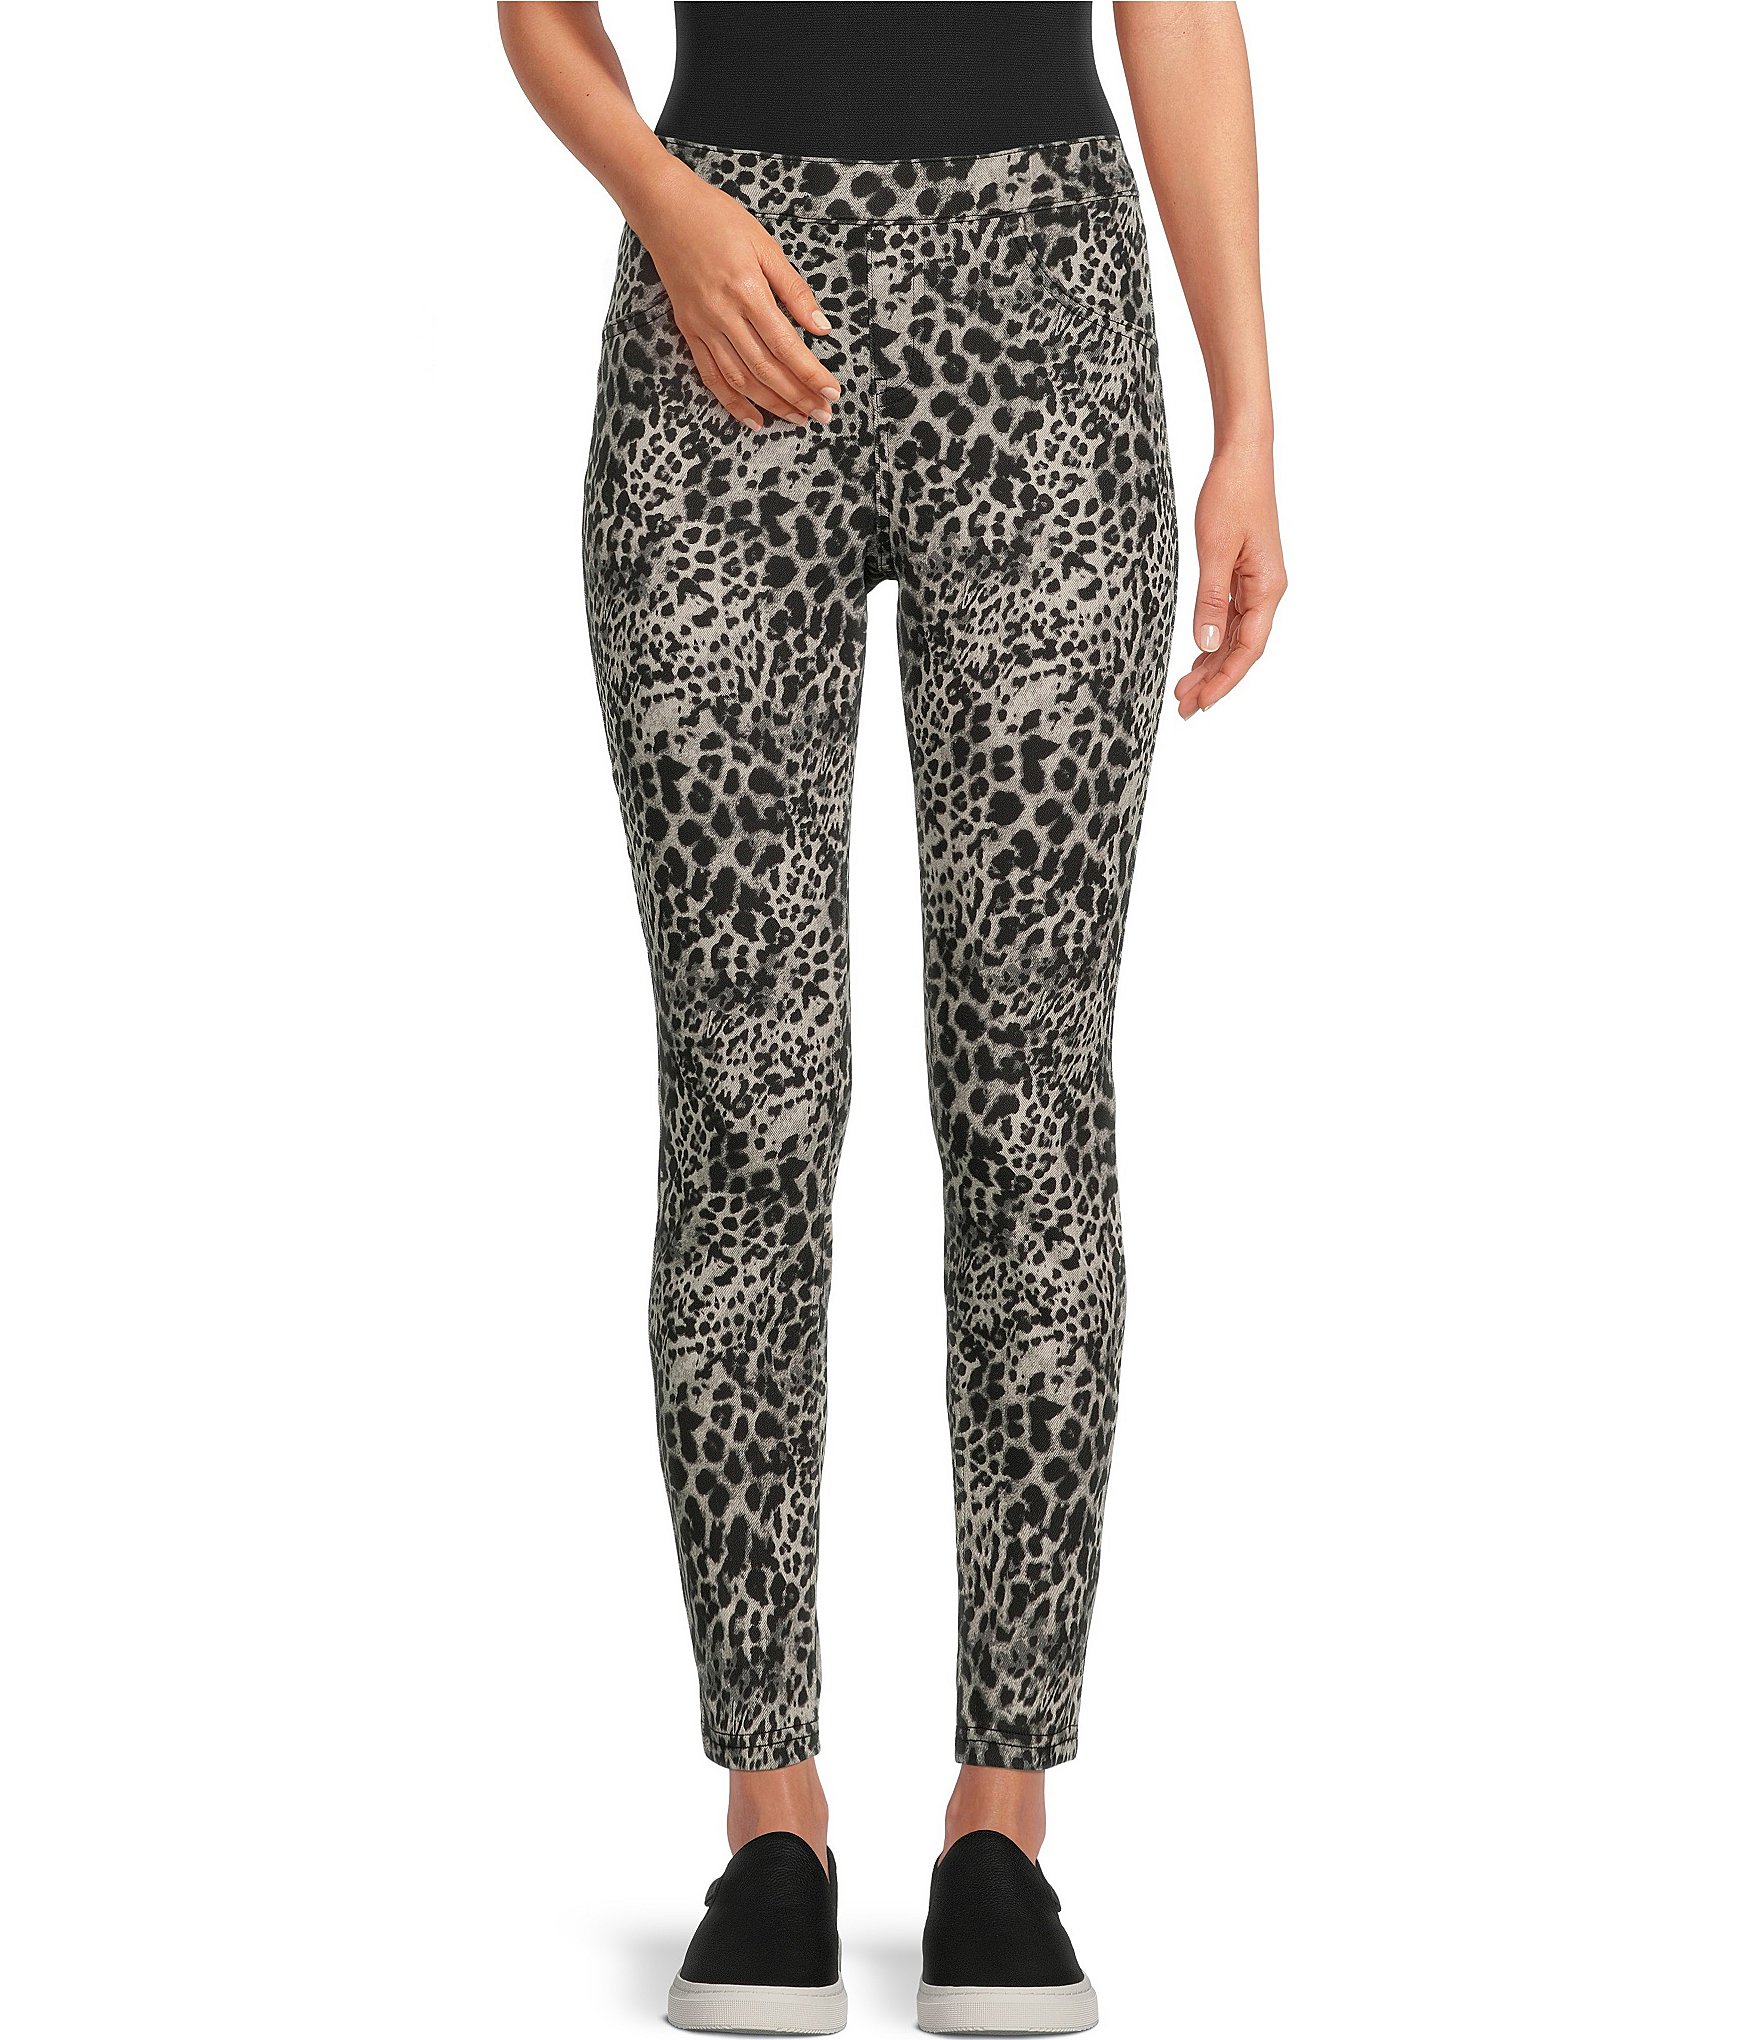 Buy Stylish Leopard Print Leggings. at Amazon.in